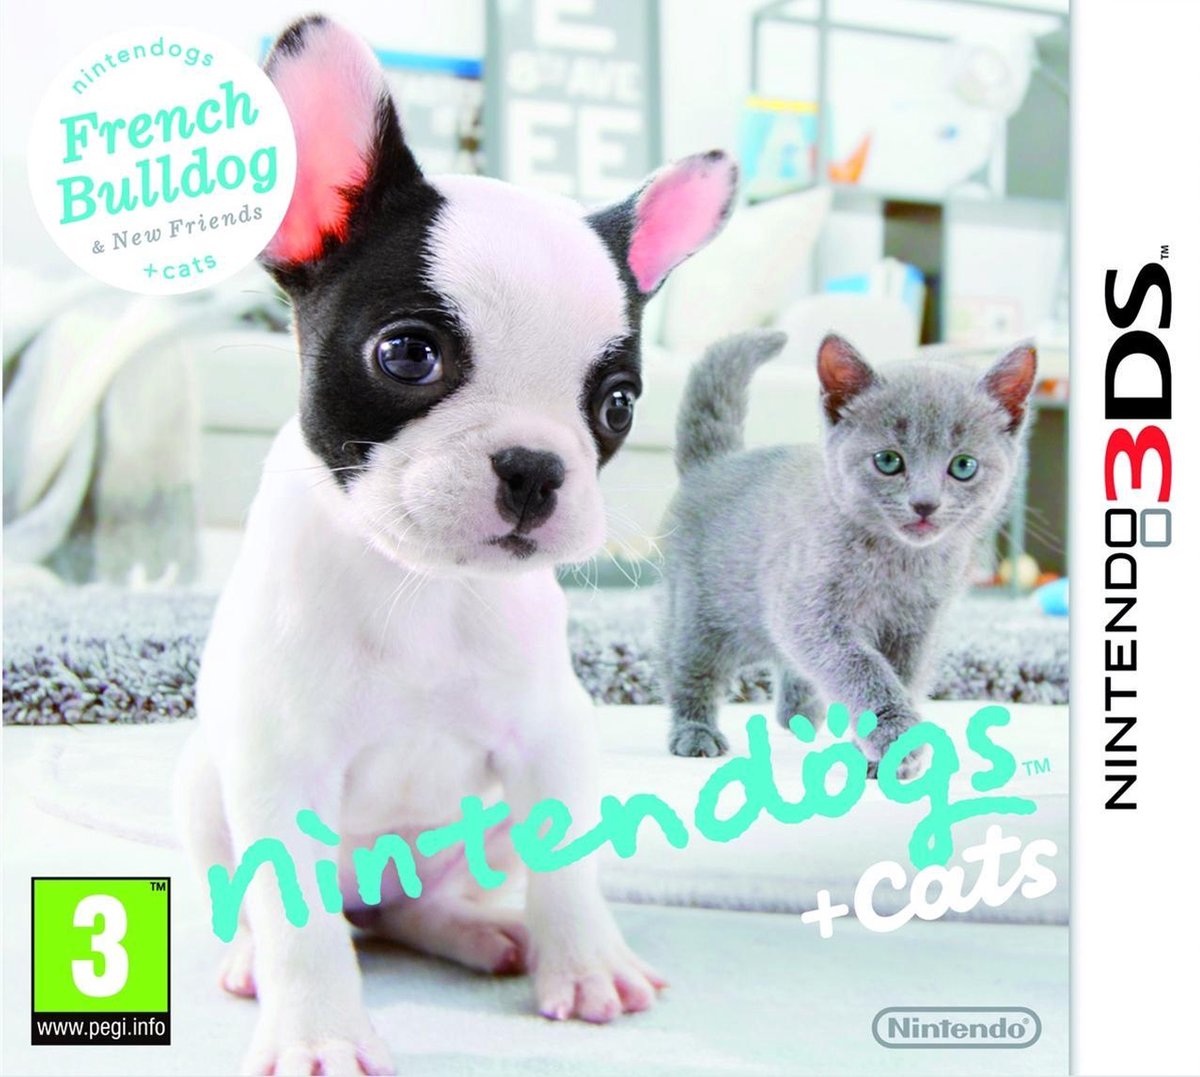 Nintendo gs + Cats Bulldog